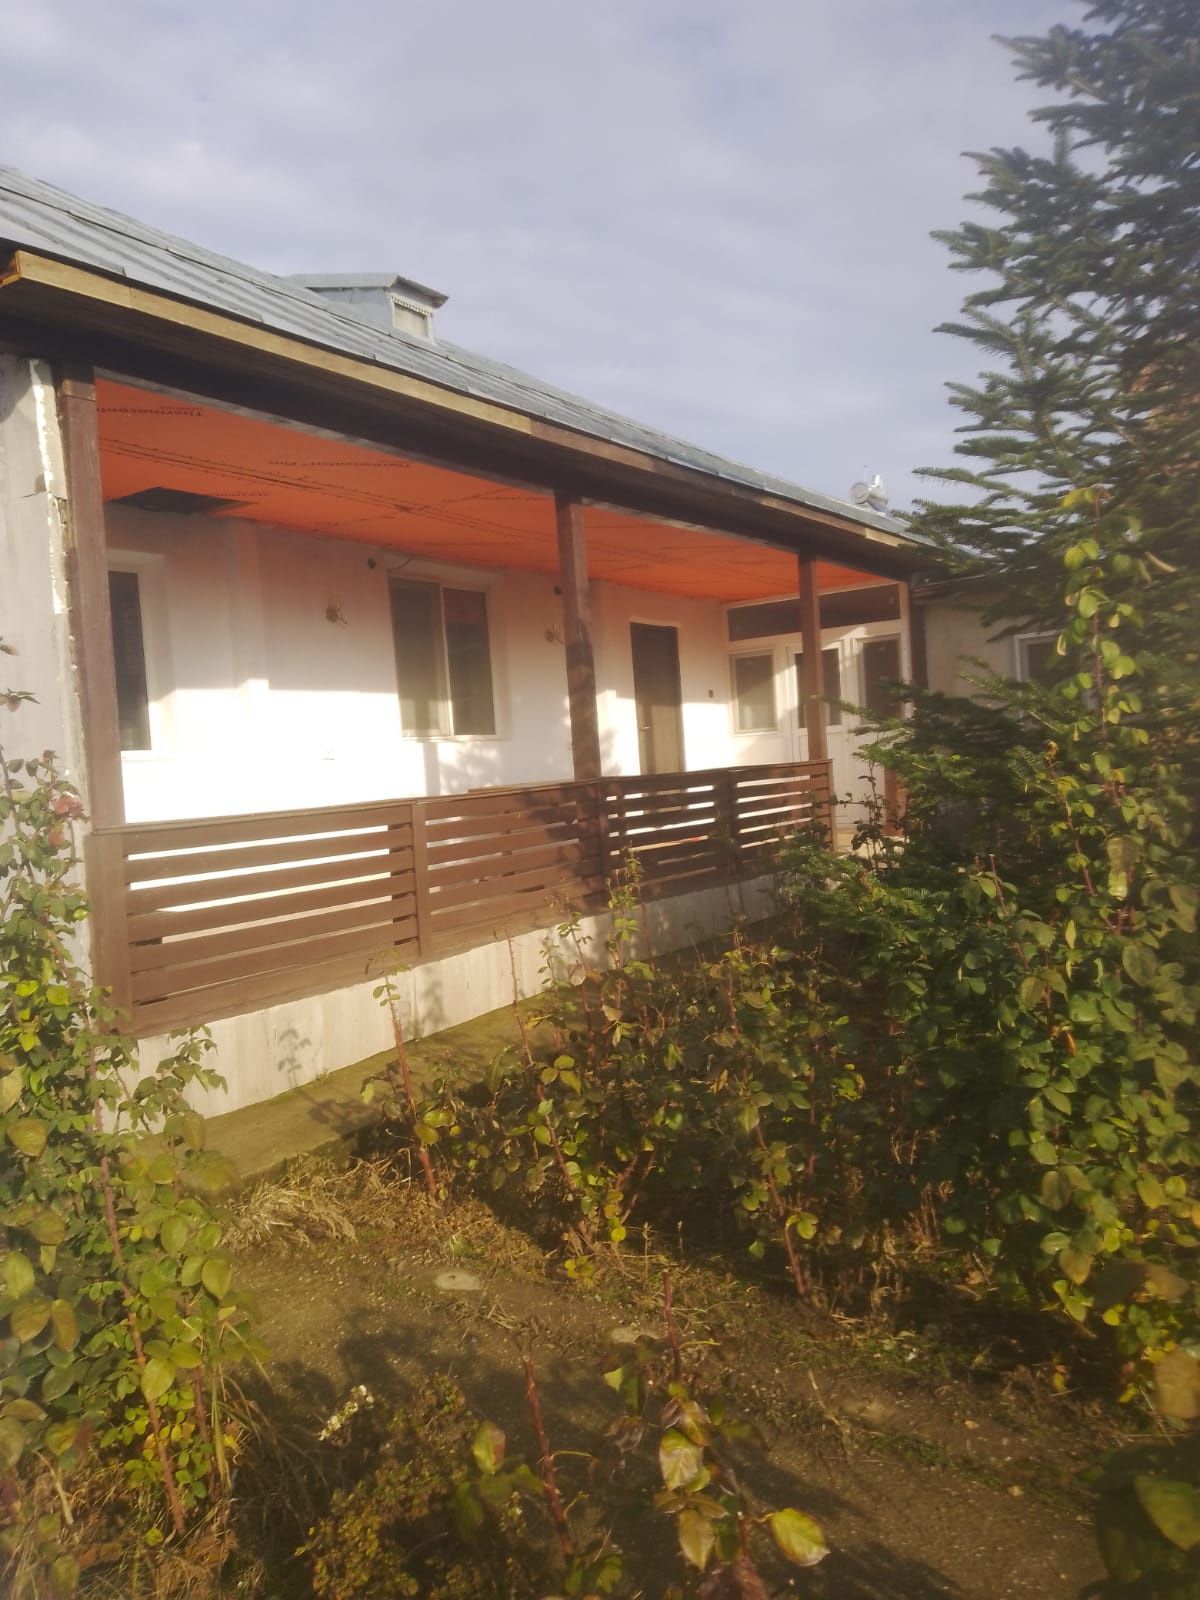 Vând casa locuibilă si teren in comuna Izvozrele / Teleorman